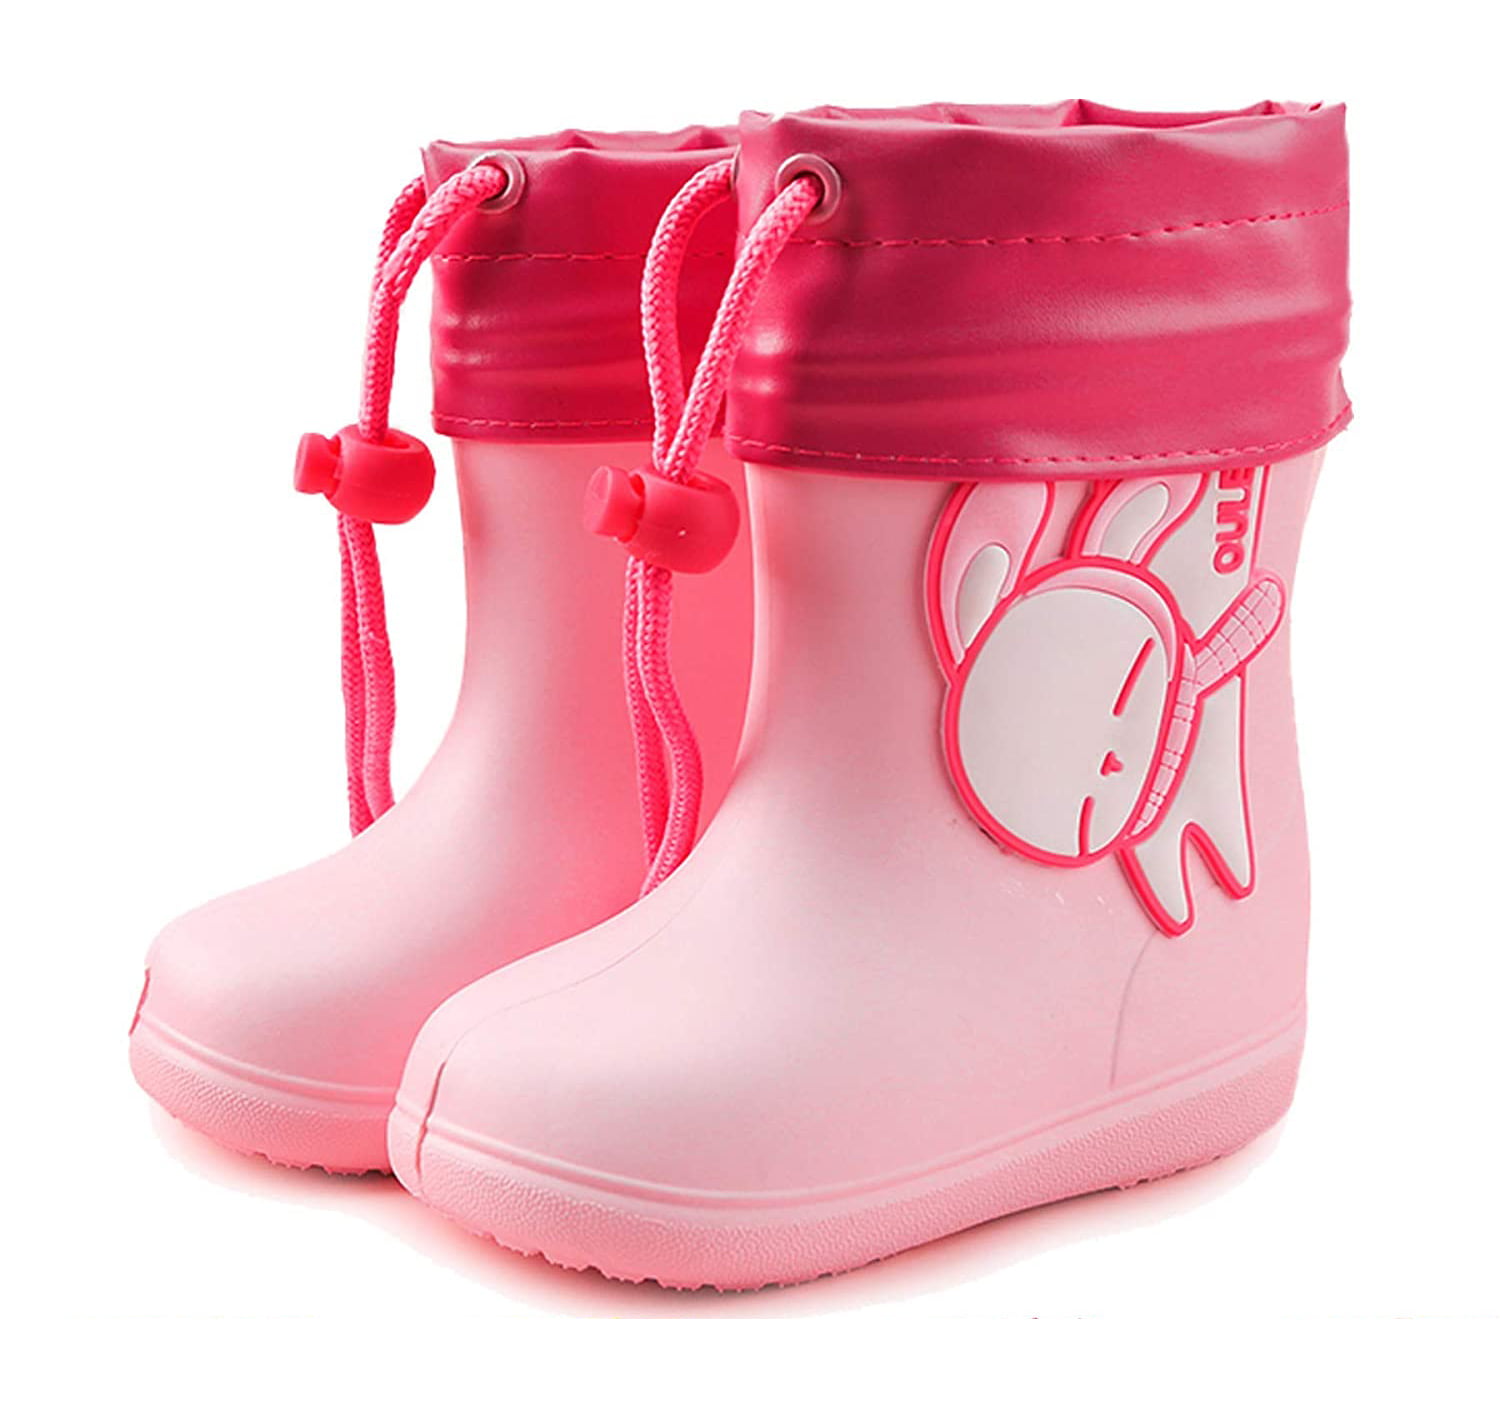 Flashing Wellies Wellington for Girls and Boys Size 4-13 1-2 K KomForme Kids Light-Up Rain Boots 